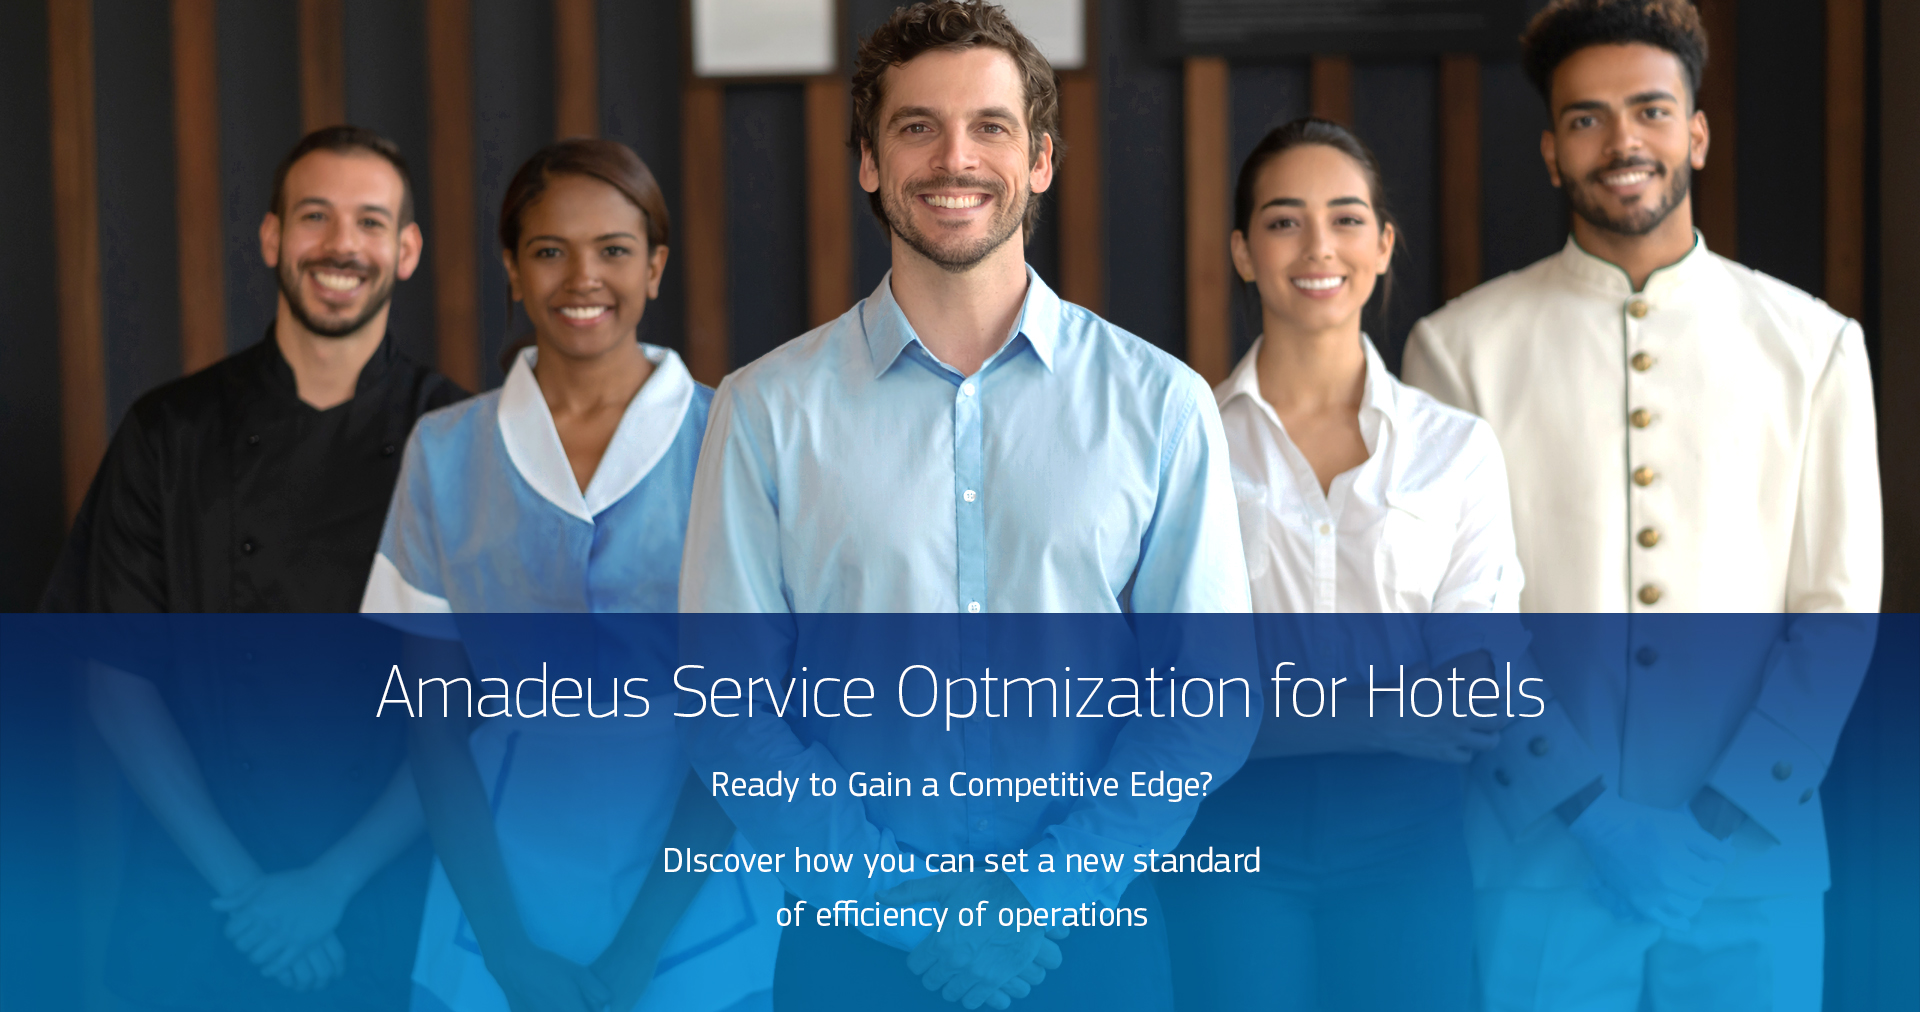 Amadeus Service Optimization for Hotels